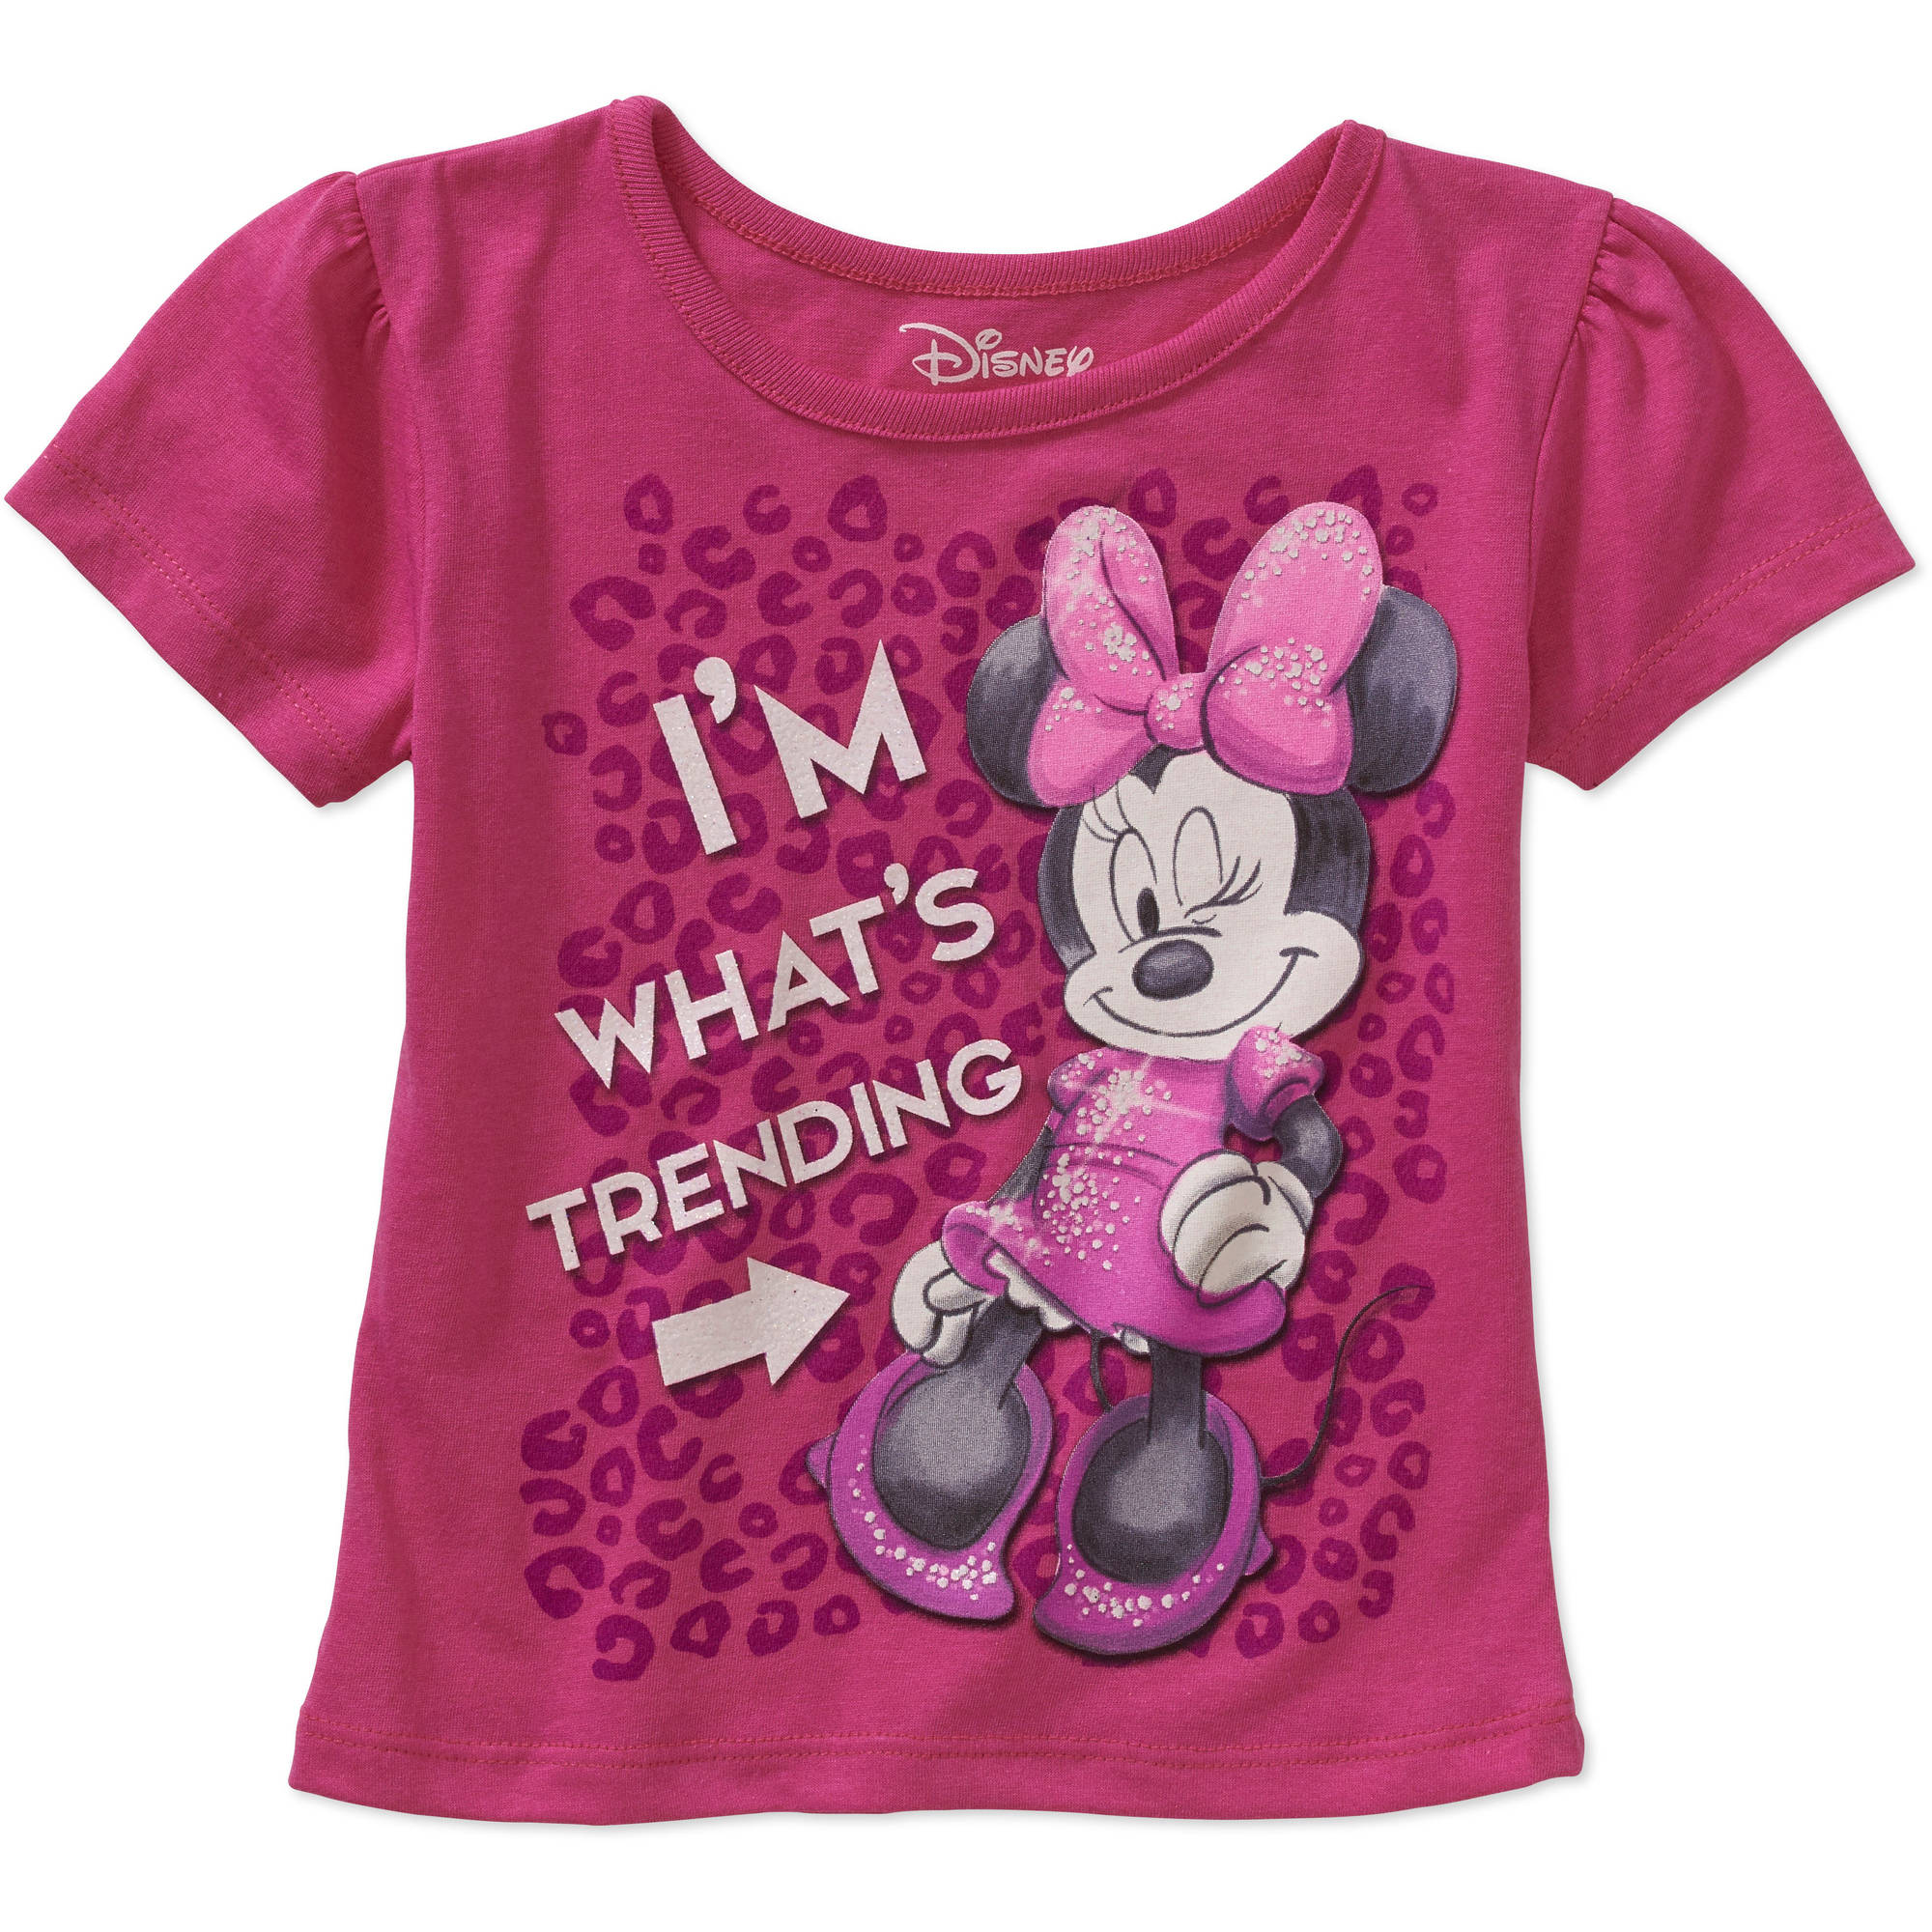 Baby Toddler Girl Graphic Tee Shirt - image 1 of 1